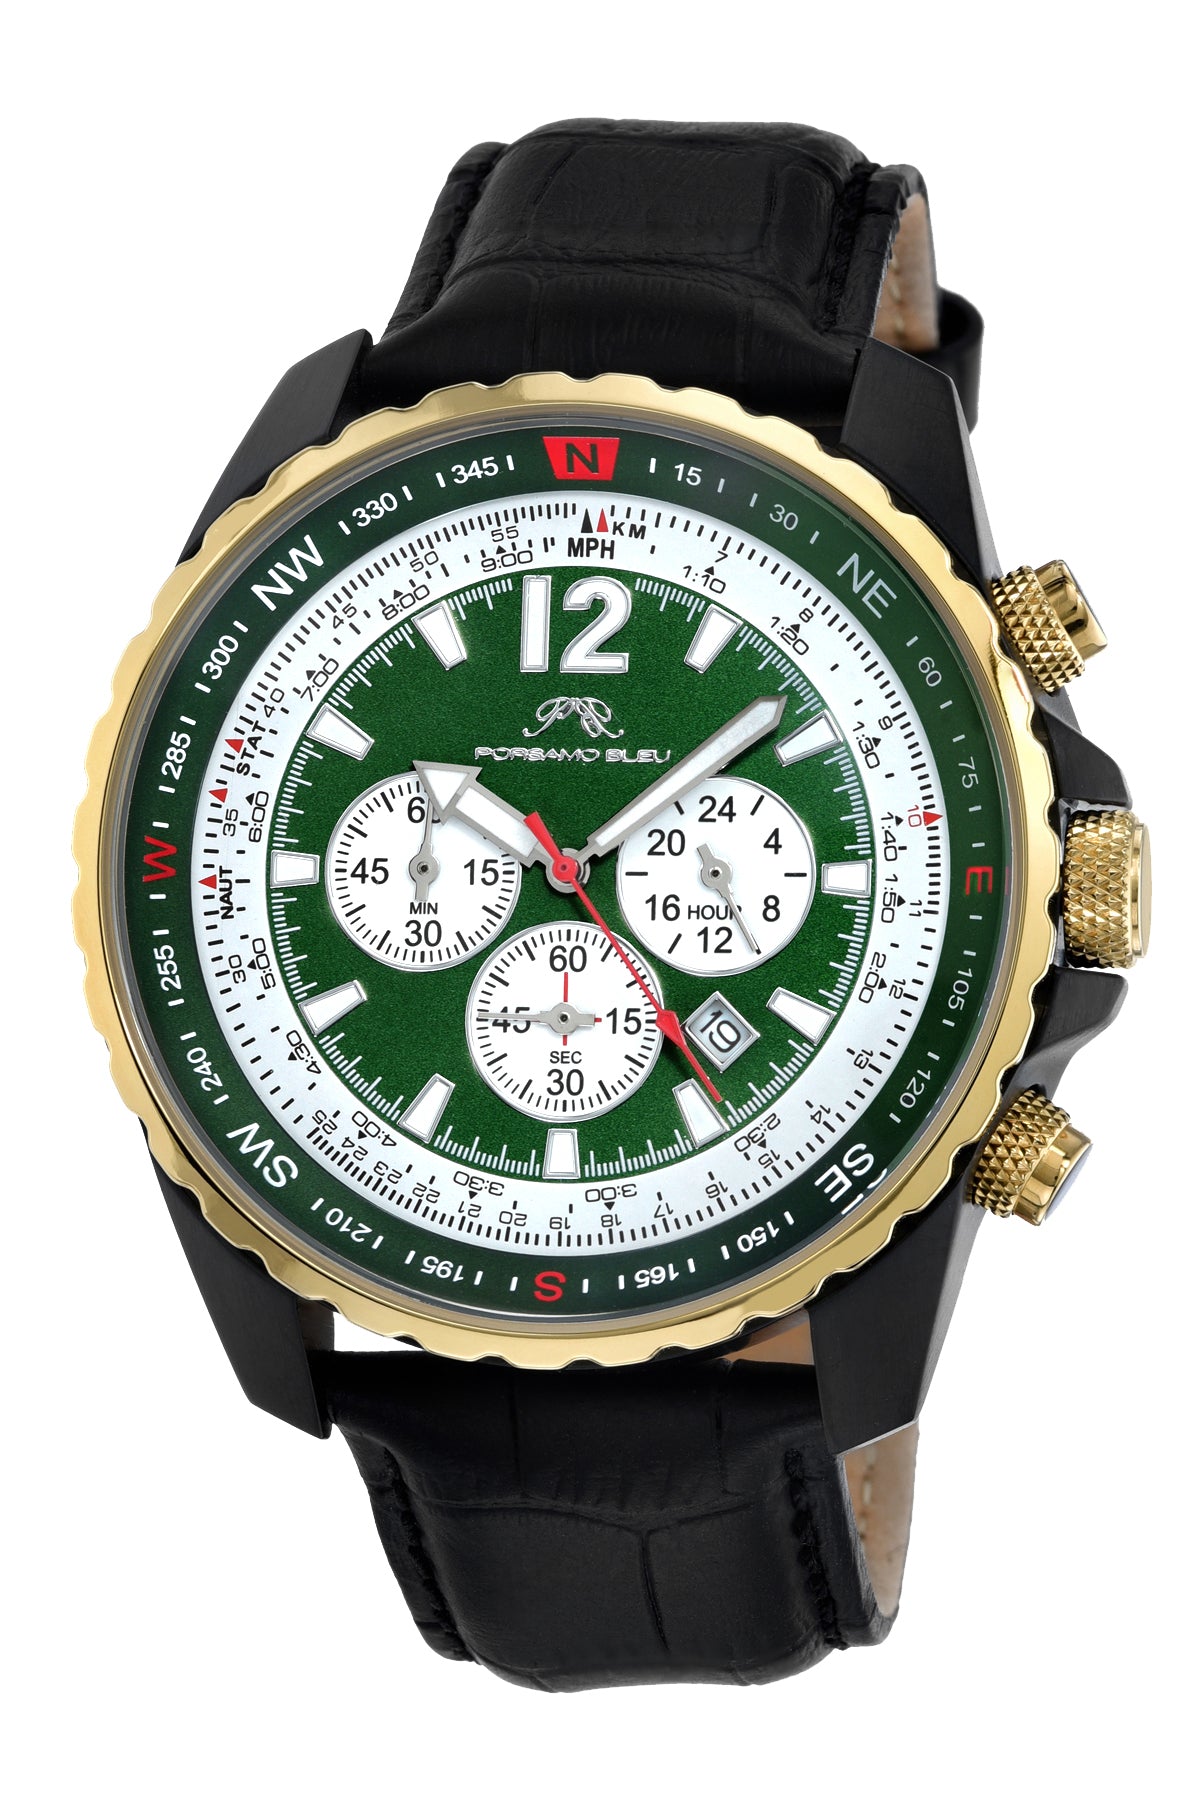 Porsamo Bleu Martin Luxury Chronograph Men's Watch Genuine Leather Band, Gold, Black, Green 353BMAL